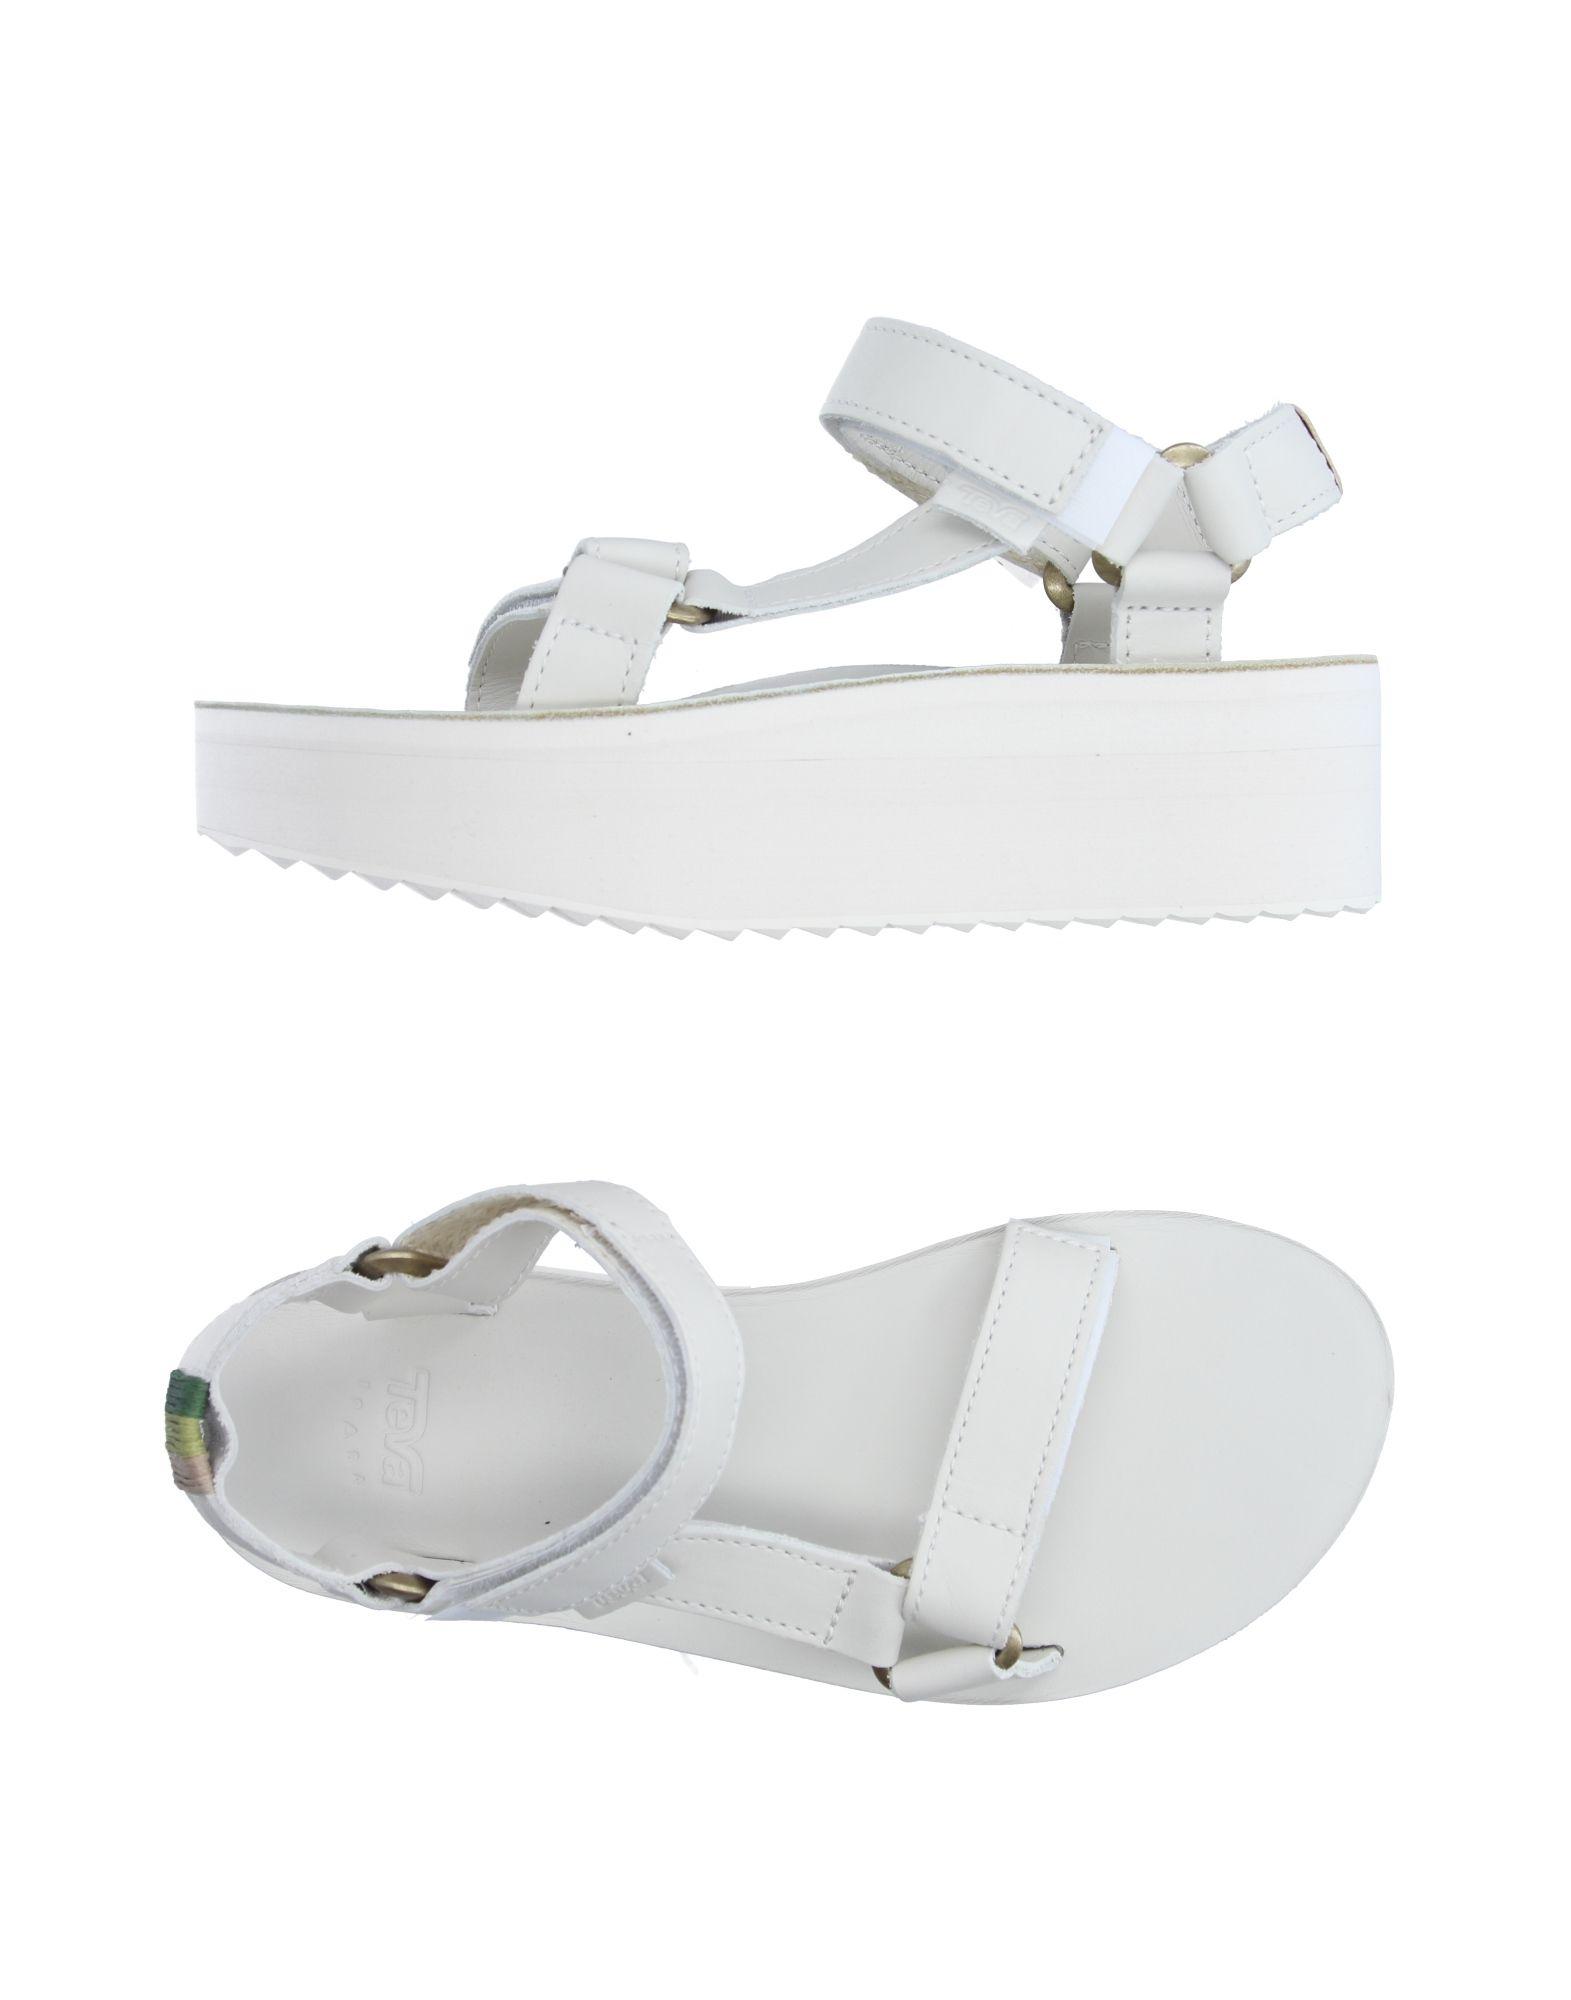 Lyst - Teva Sandals in White